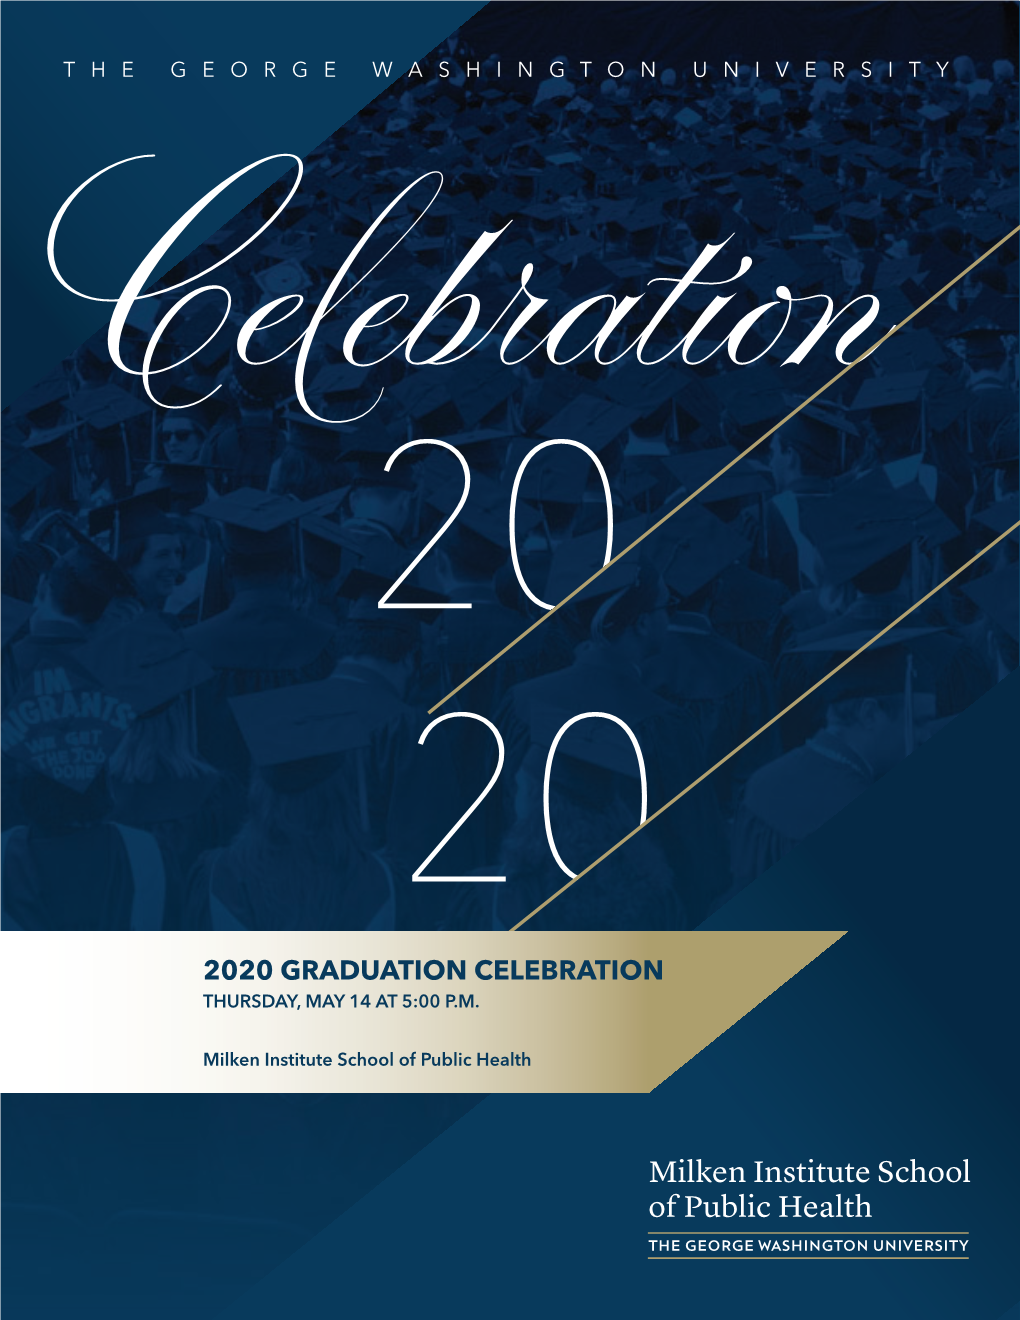 2020 Graduation Celebration Thursday, May 14 at 5:00 P.M